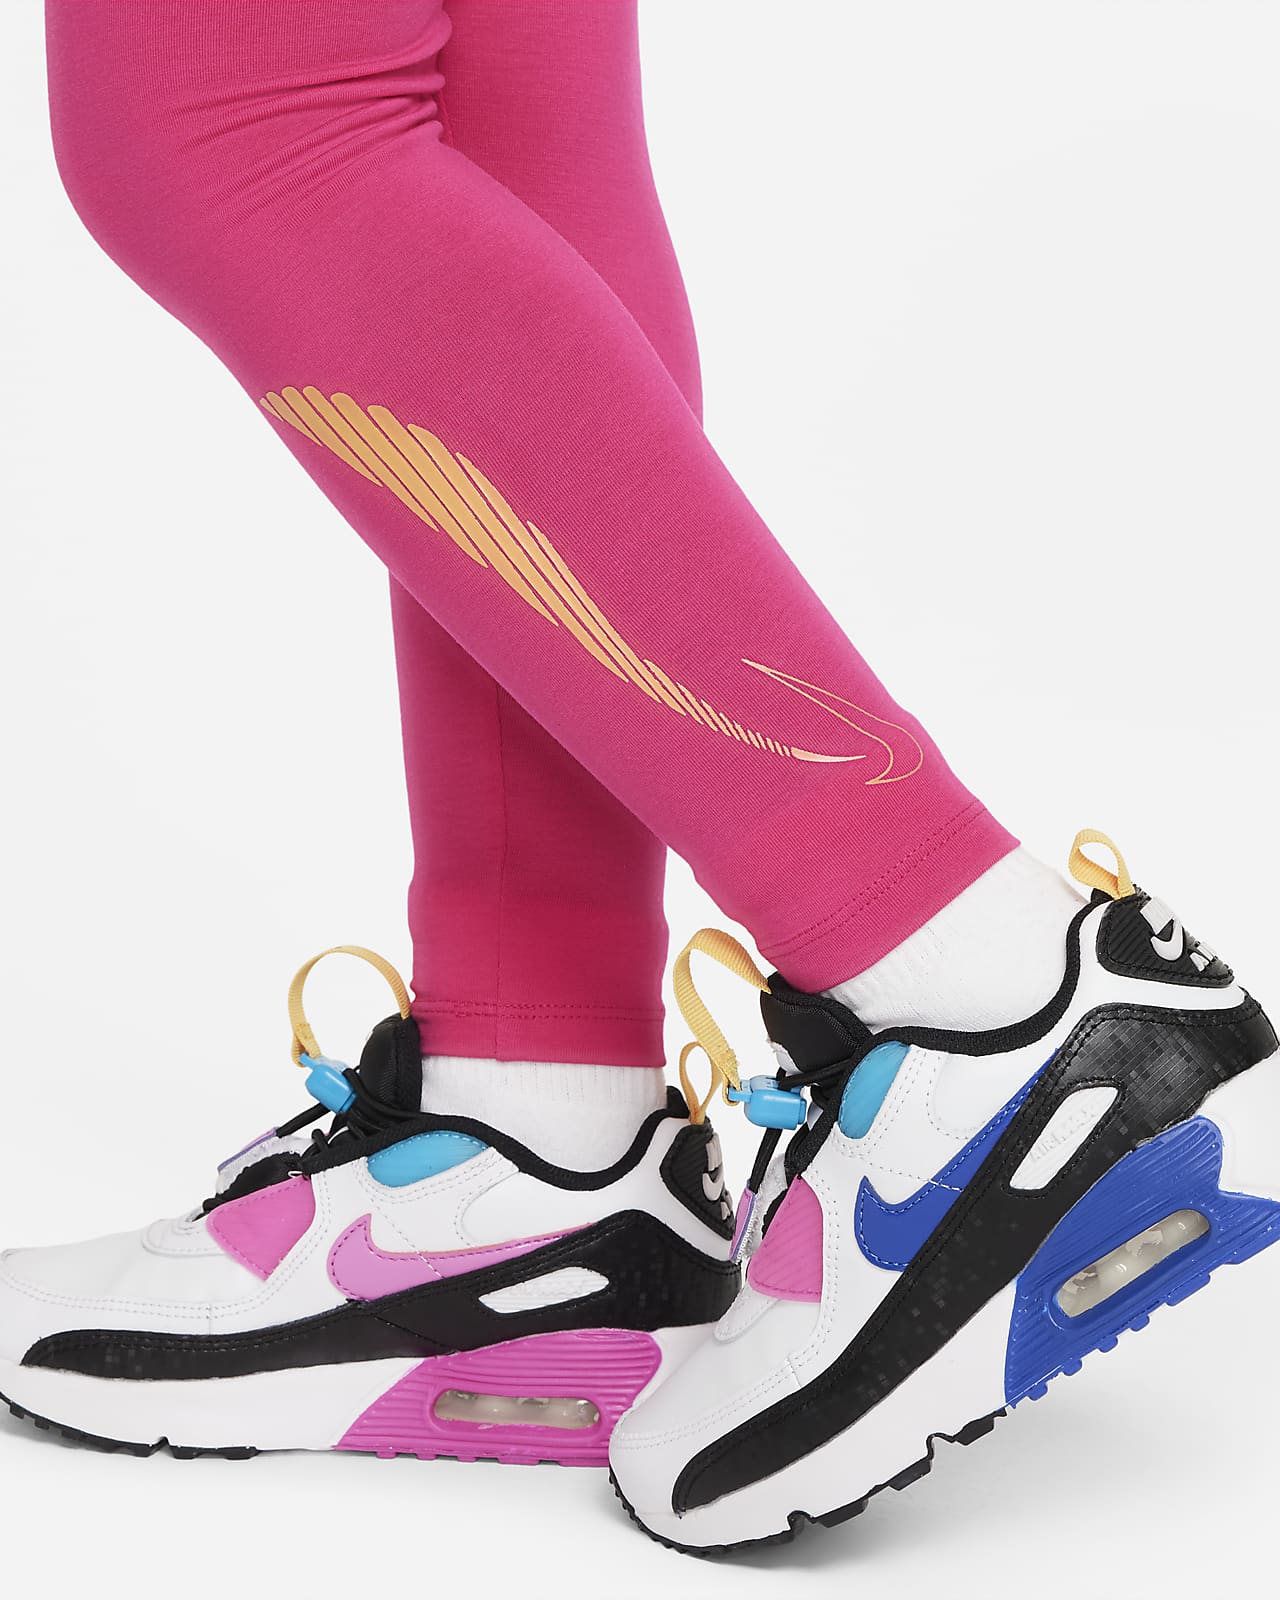 Nike Shiny Active Pants, Tights & Leggings